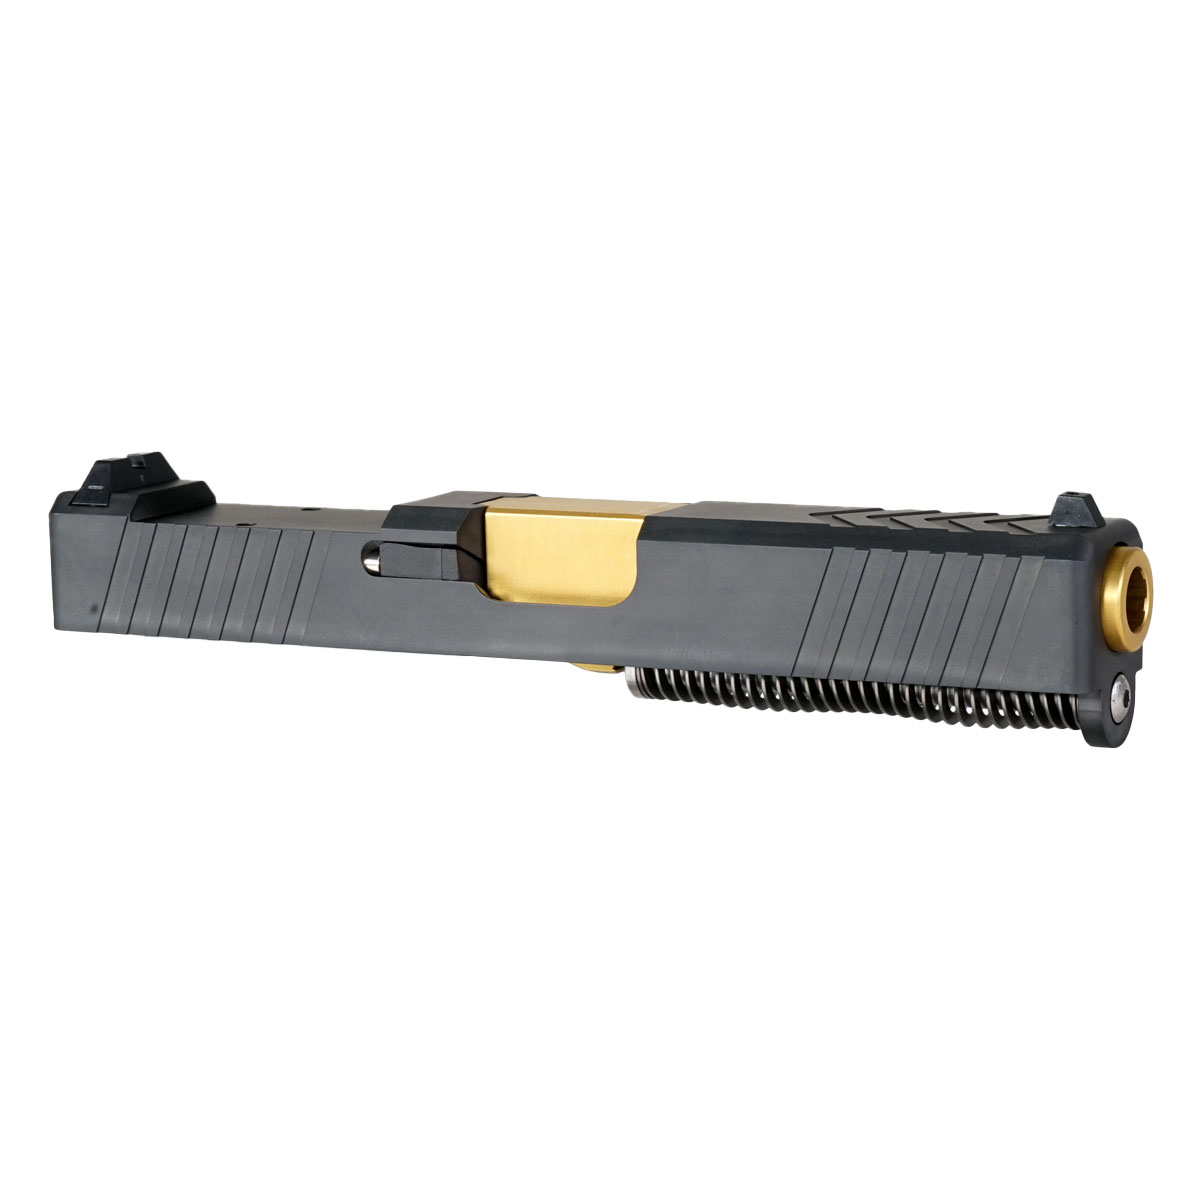 DD 'Swindler's Chest' 9mm Complete Slide Kit - Glock 19 Gen 1-3 Compatible